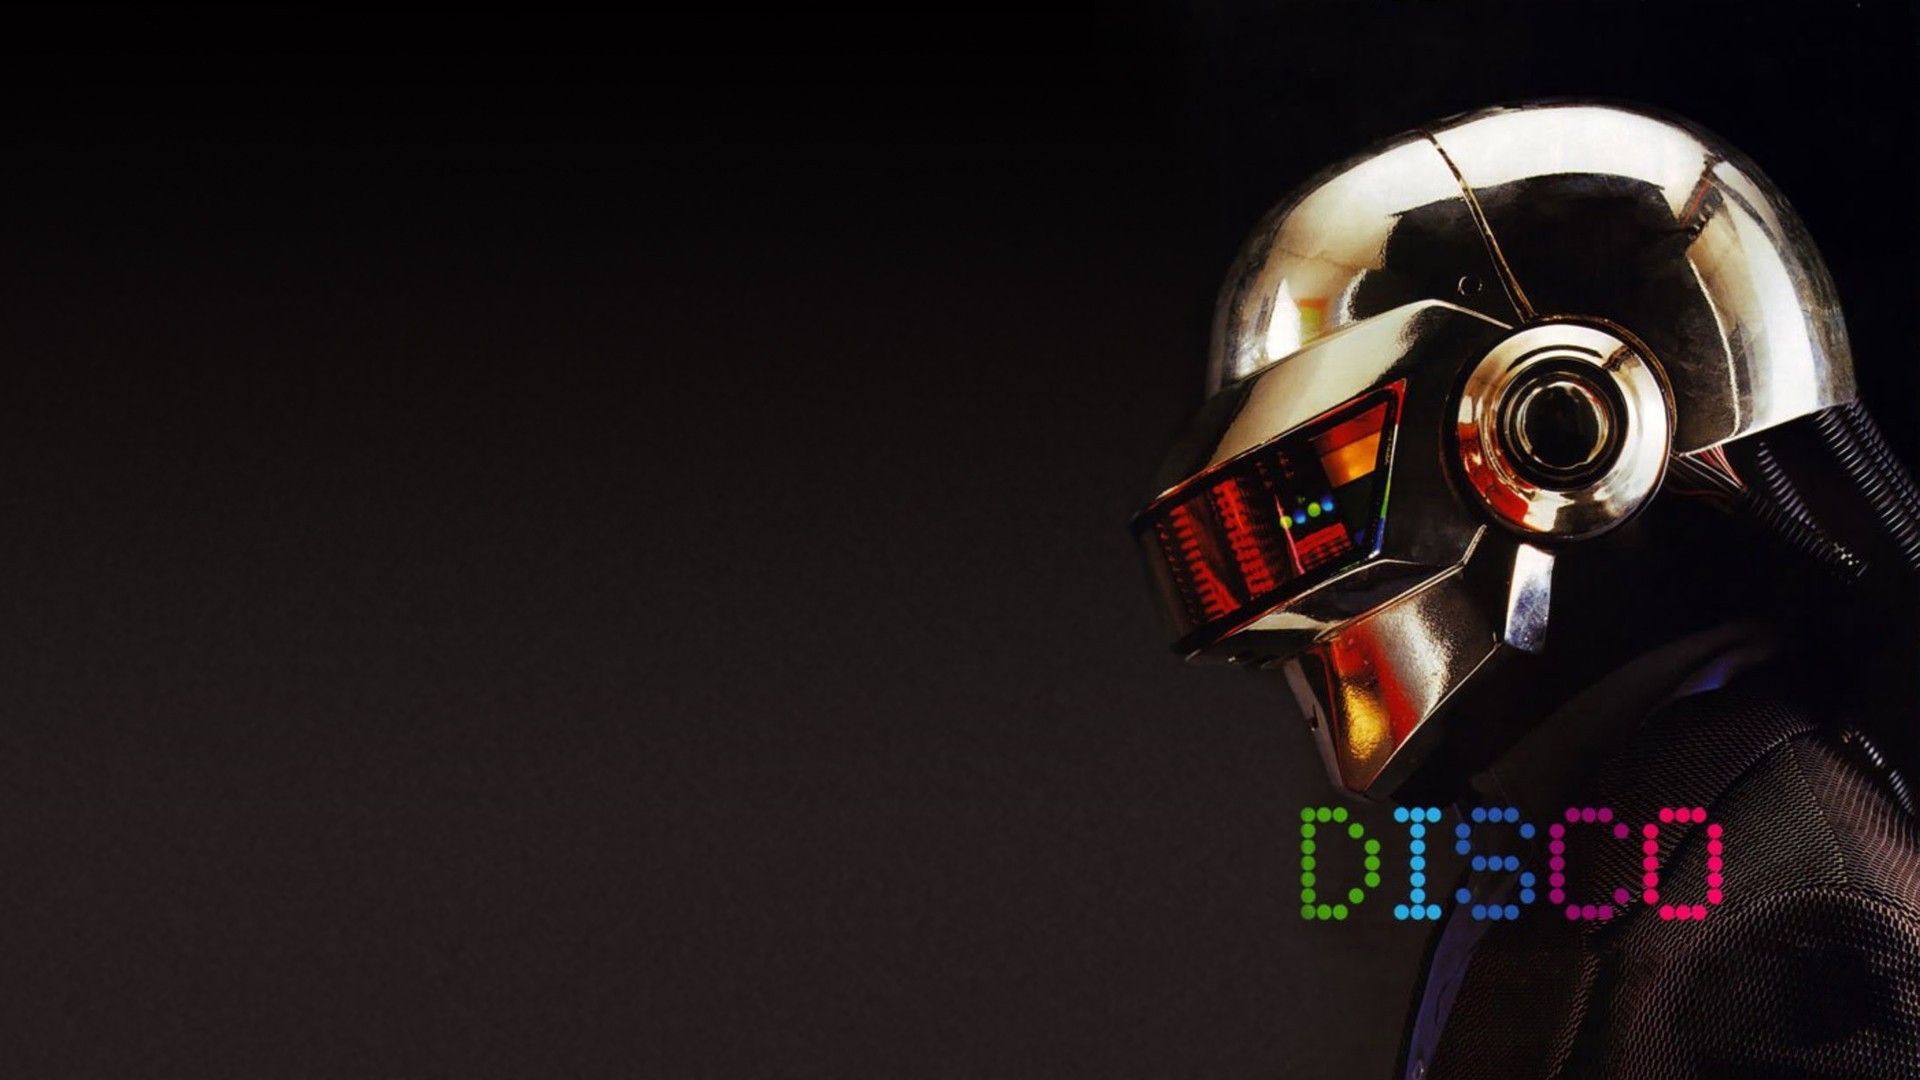 General 1920x1080 disco music Daft Punk electronic music simple background helmet musician